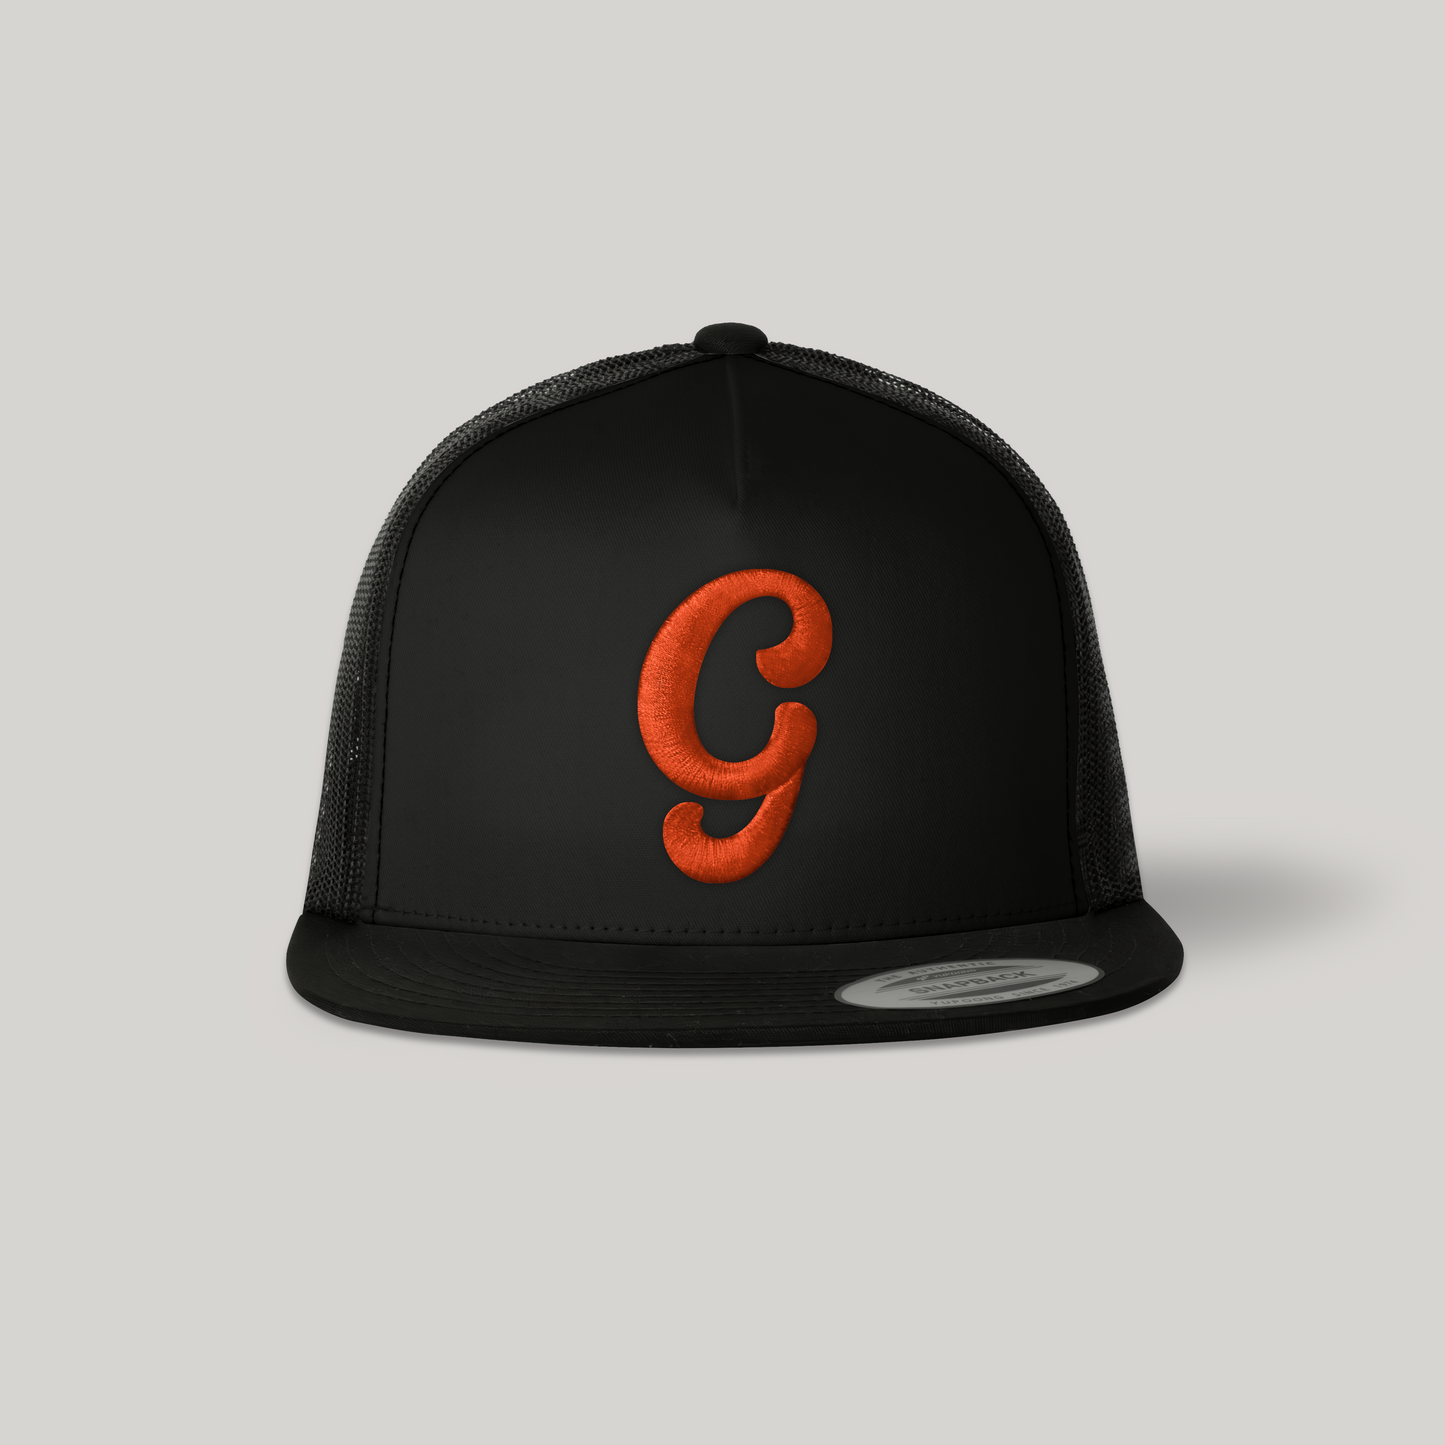 Classic Black With Orange G Hat